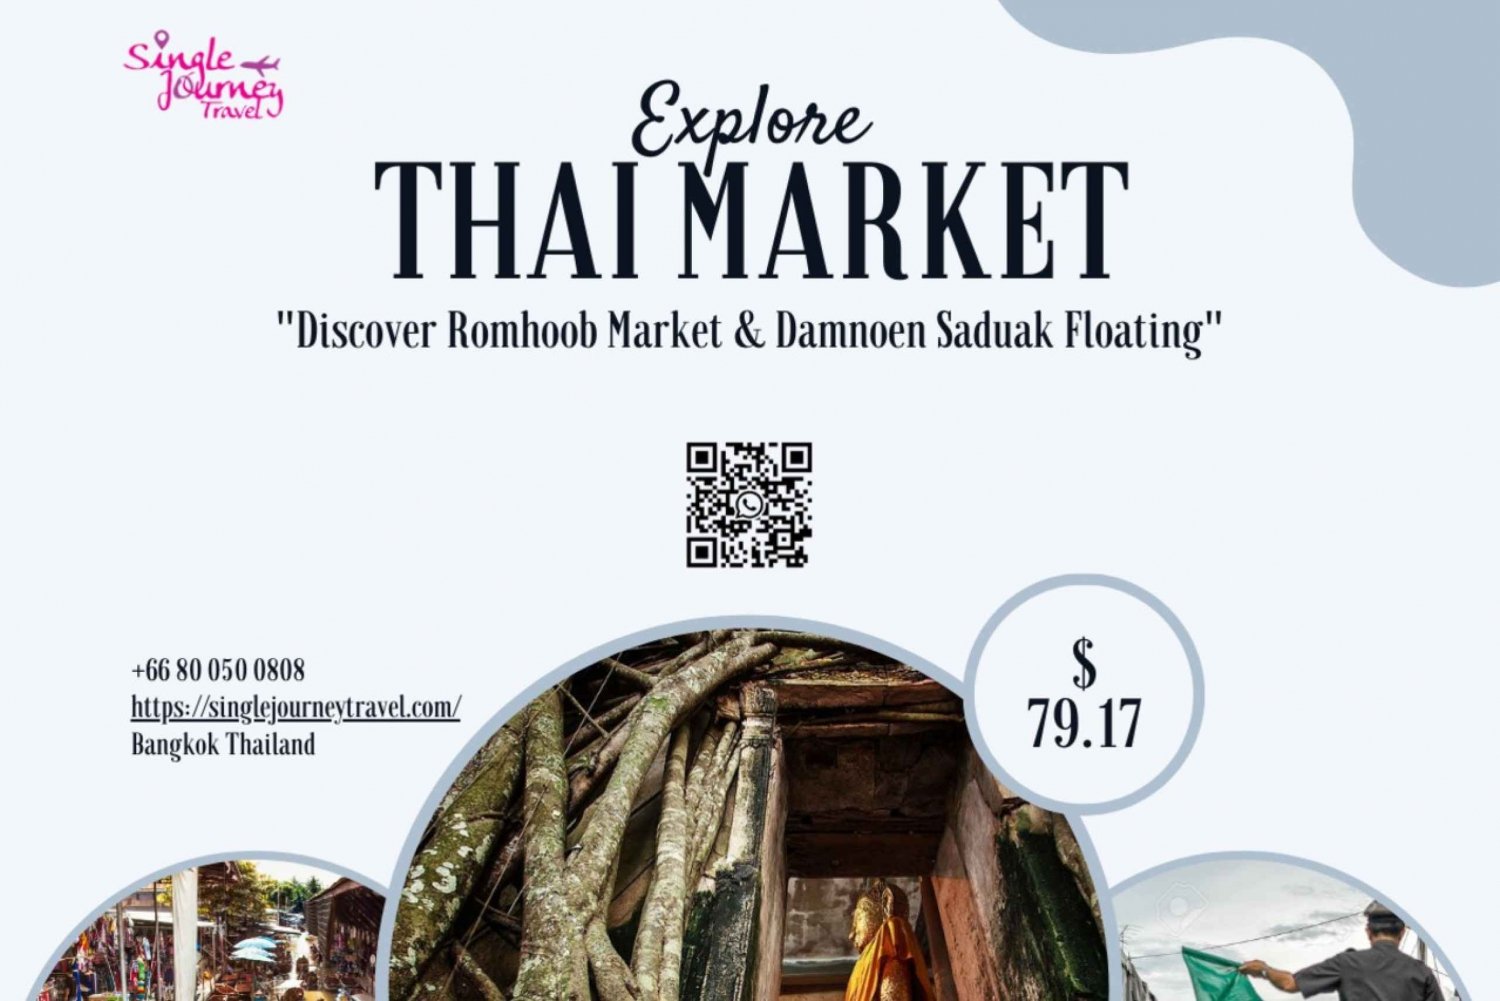 Maeklong Train Market & Damnoen Saduak flydende marked